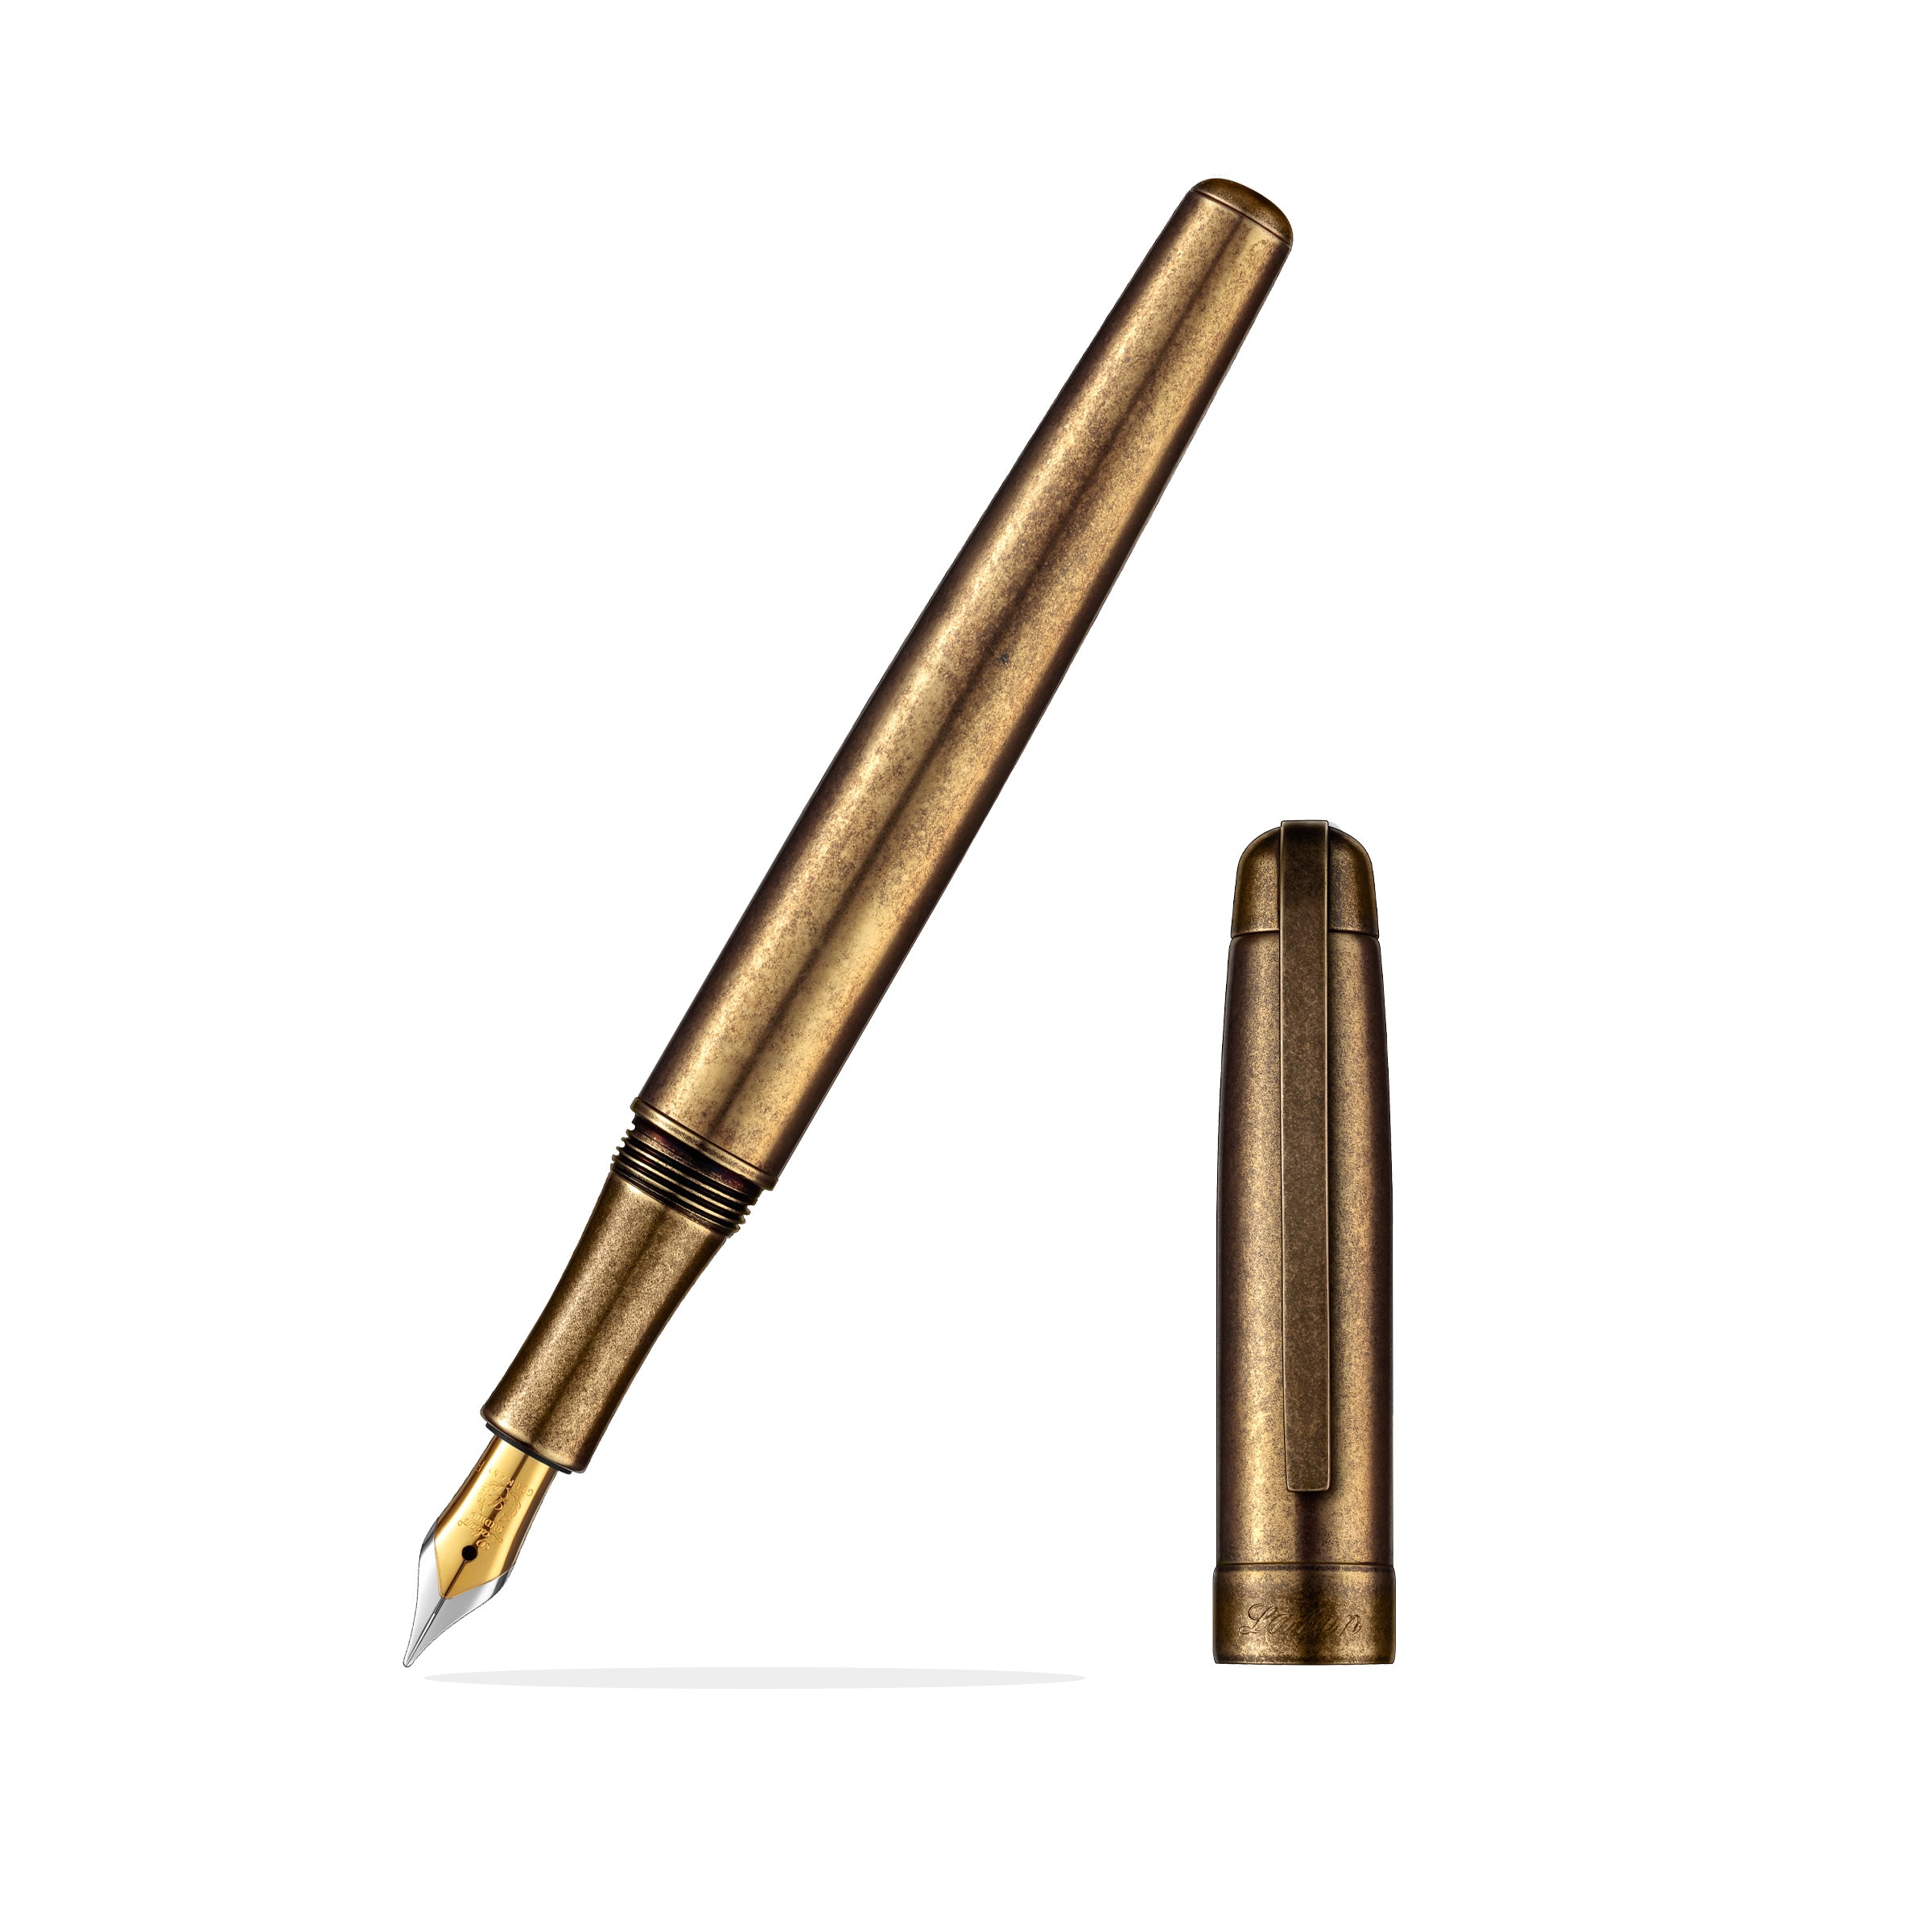 The $5 Brass Fountain Pen 